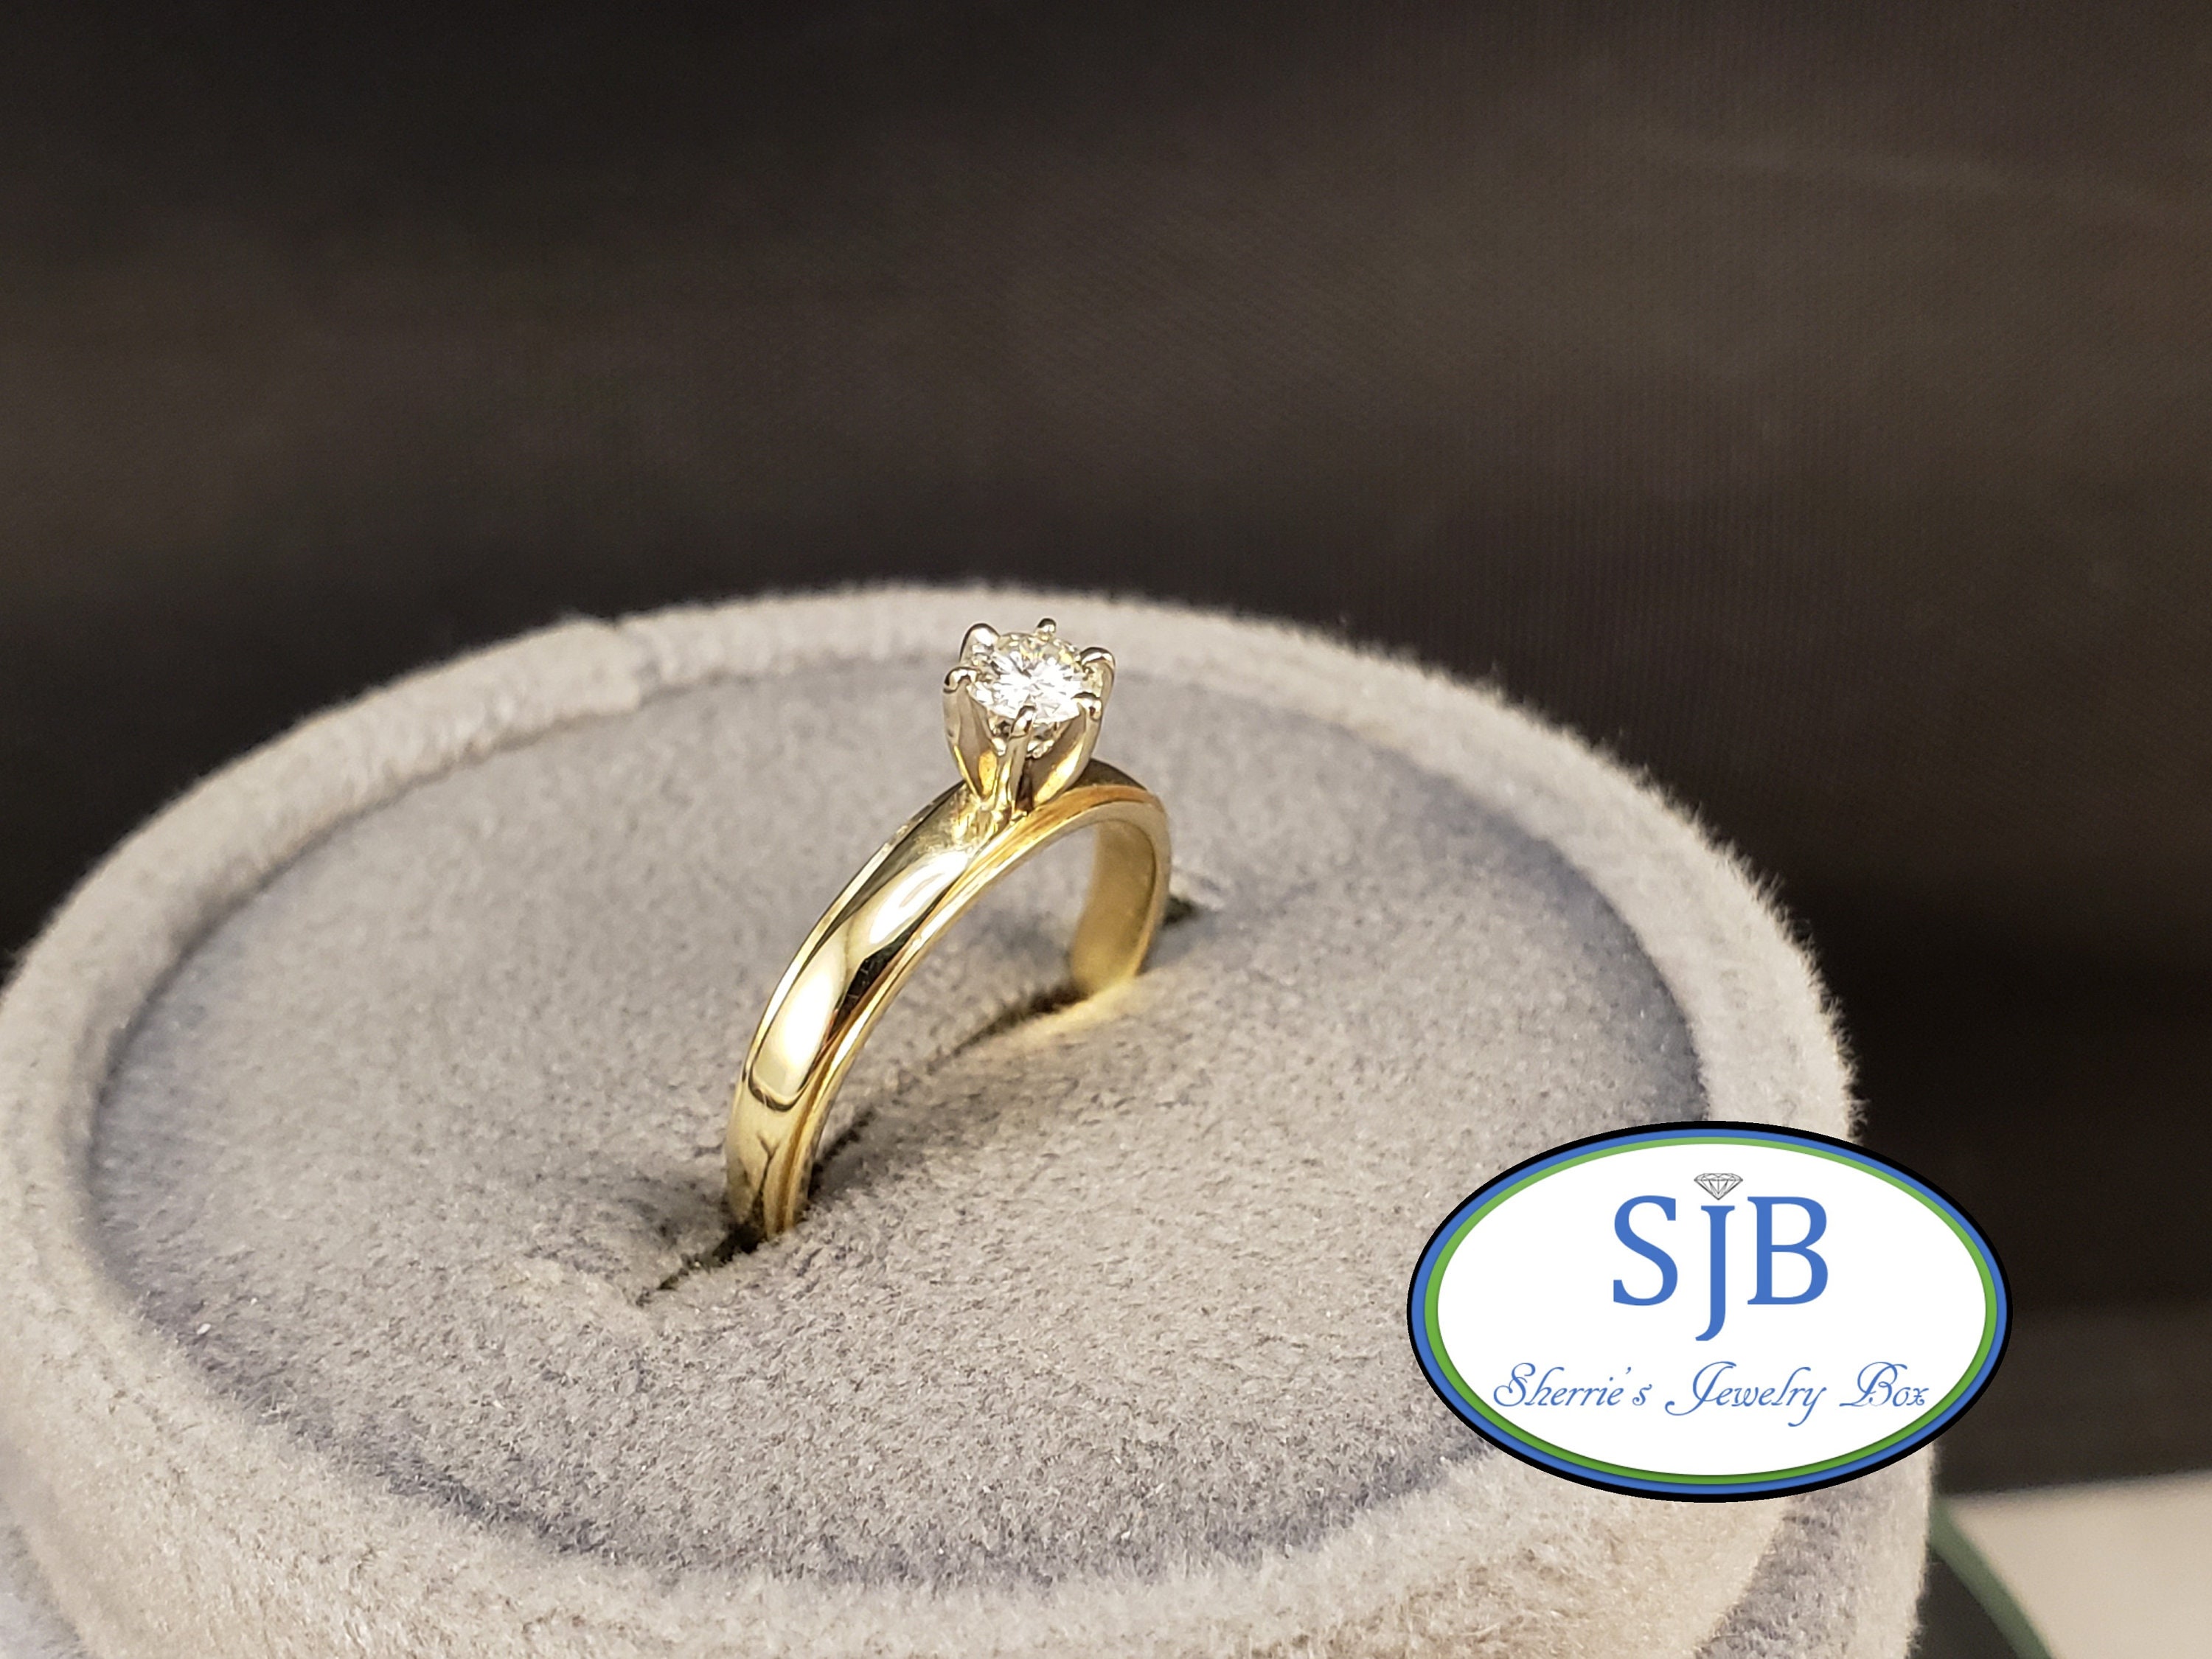 Buy Mia By Tanishq Women 14KT Gold Ring In Fan Design With Diamonds - Ring  Diamond for Women 11173288 | Myntra